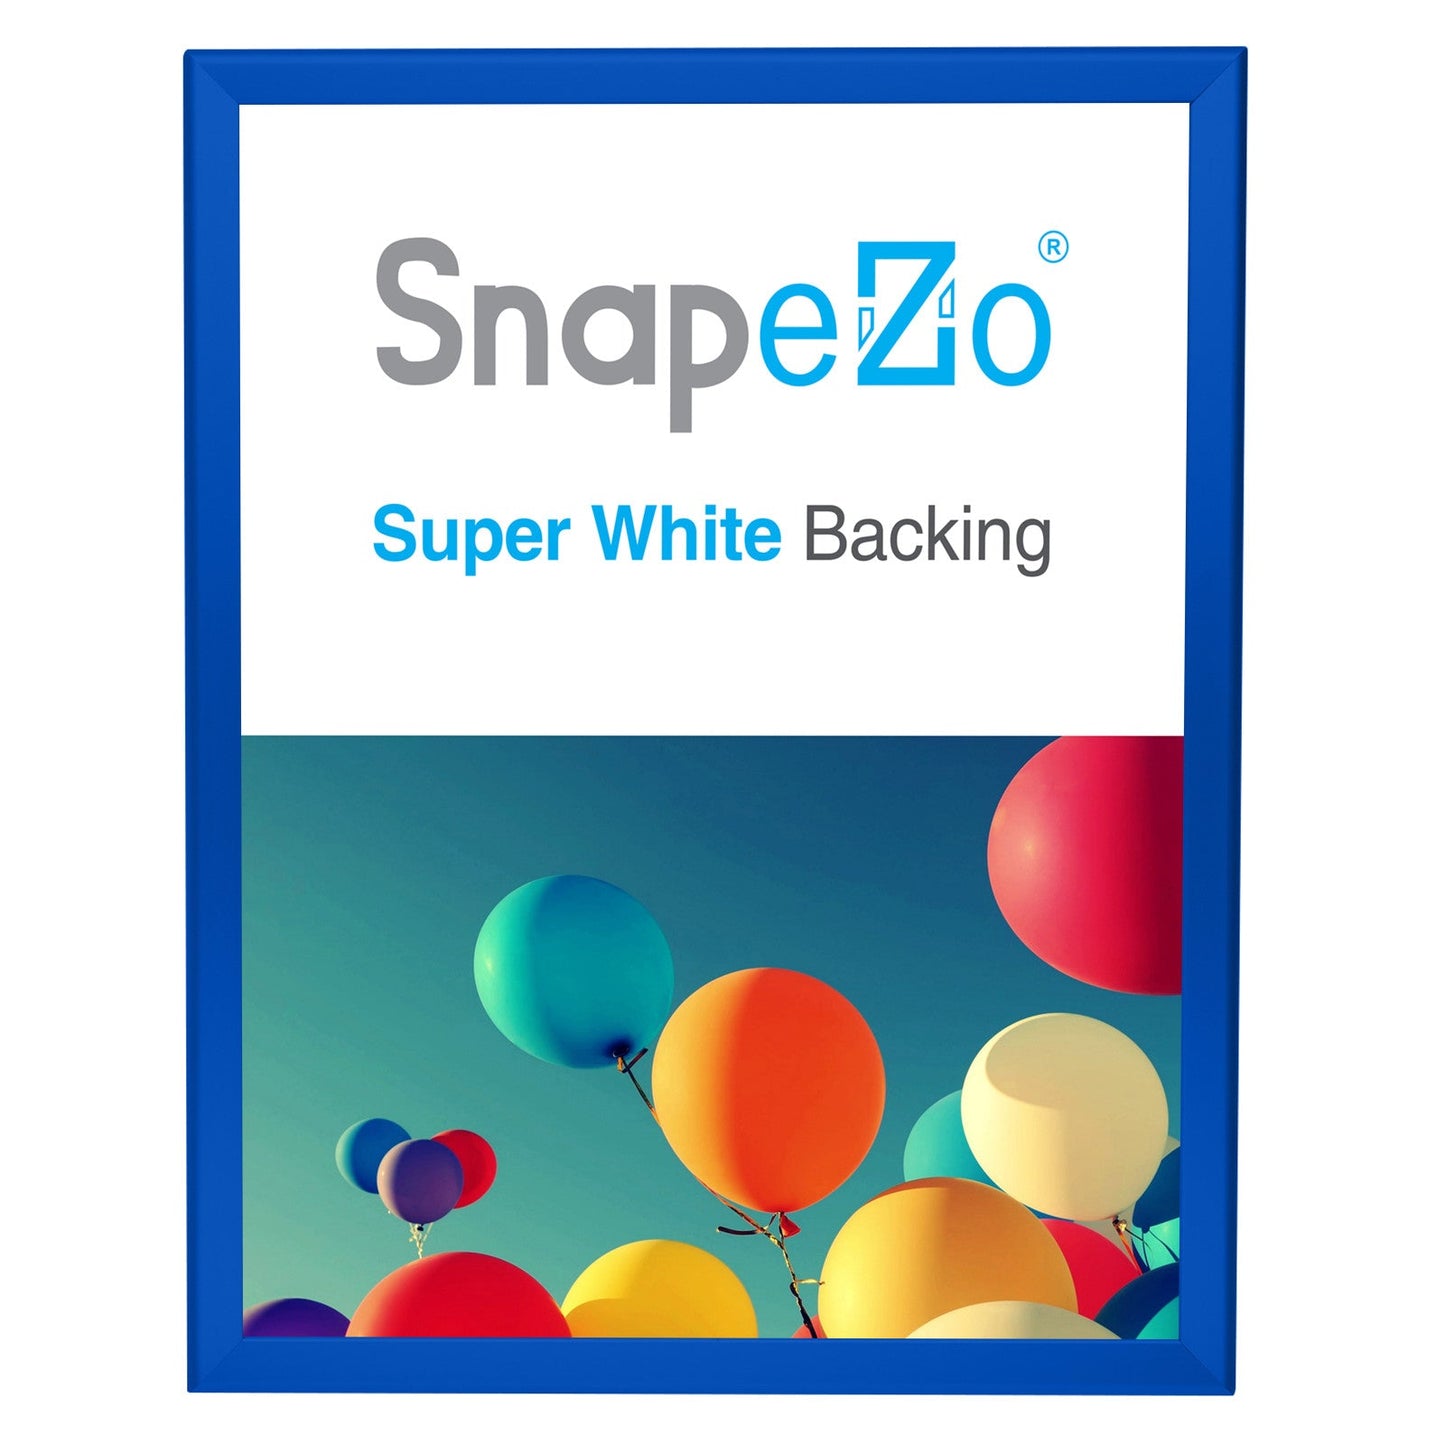 18x24 Blue SnapeZo® Snap Frame - 1.25" Profile